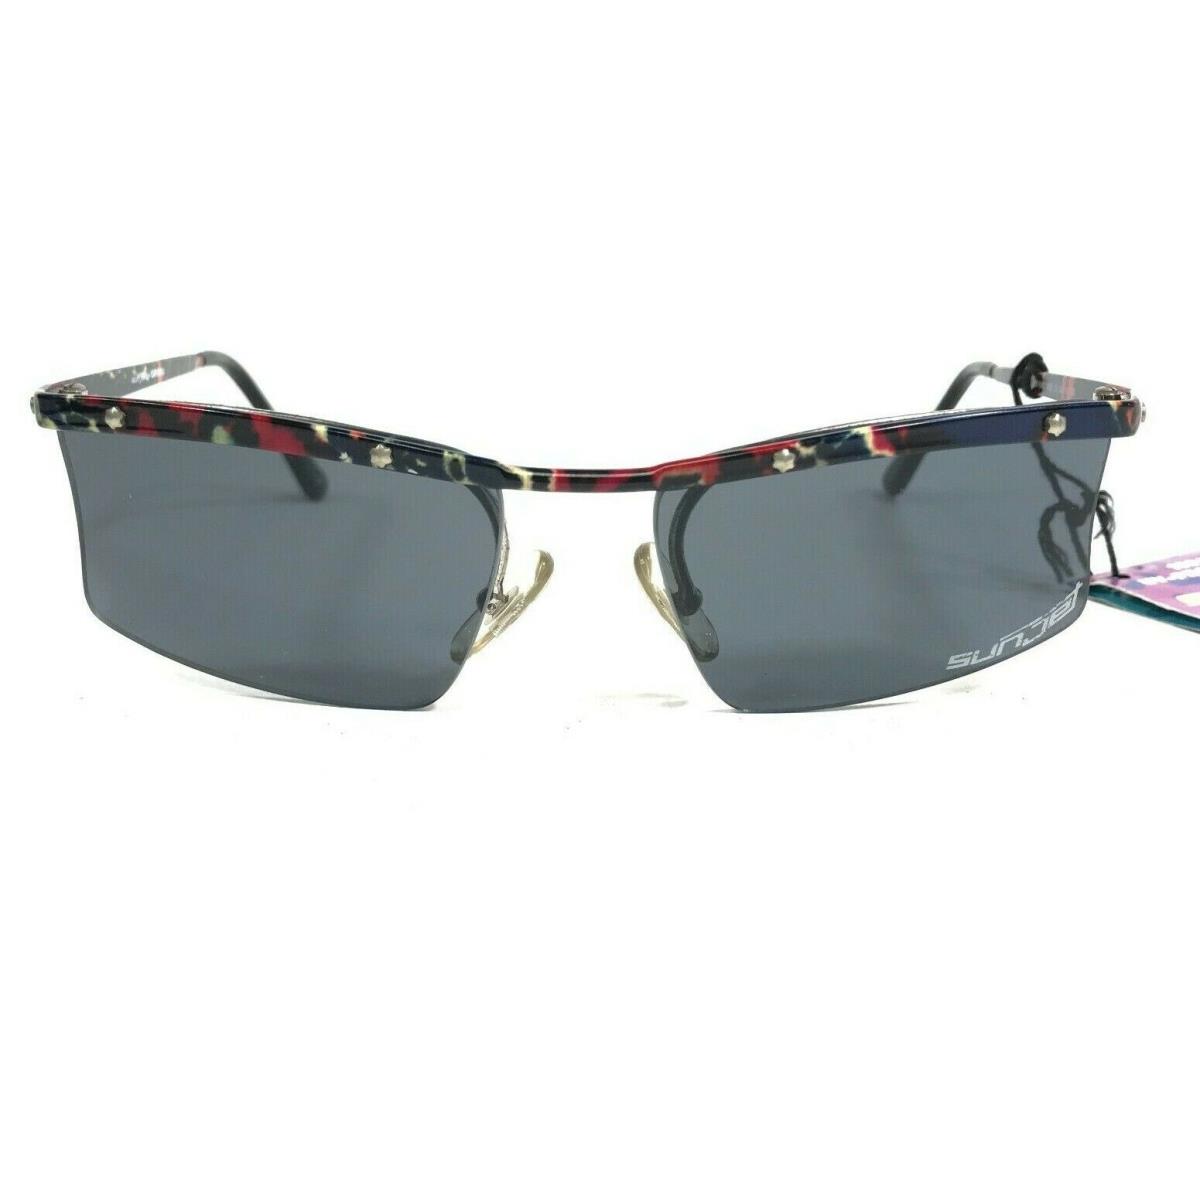 Sunjet by Carrera Sunglasses 4363 30 Red Black Tortoise Half Rim w Gray Lenses